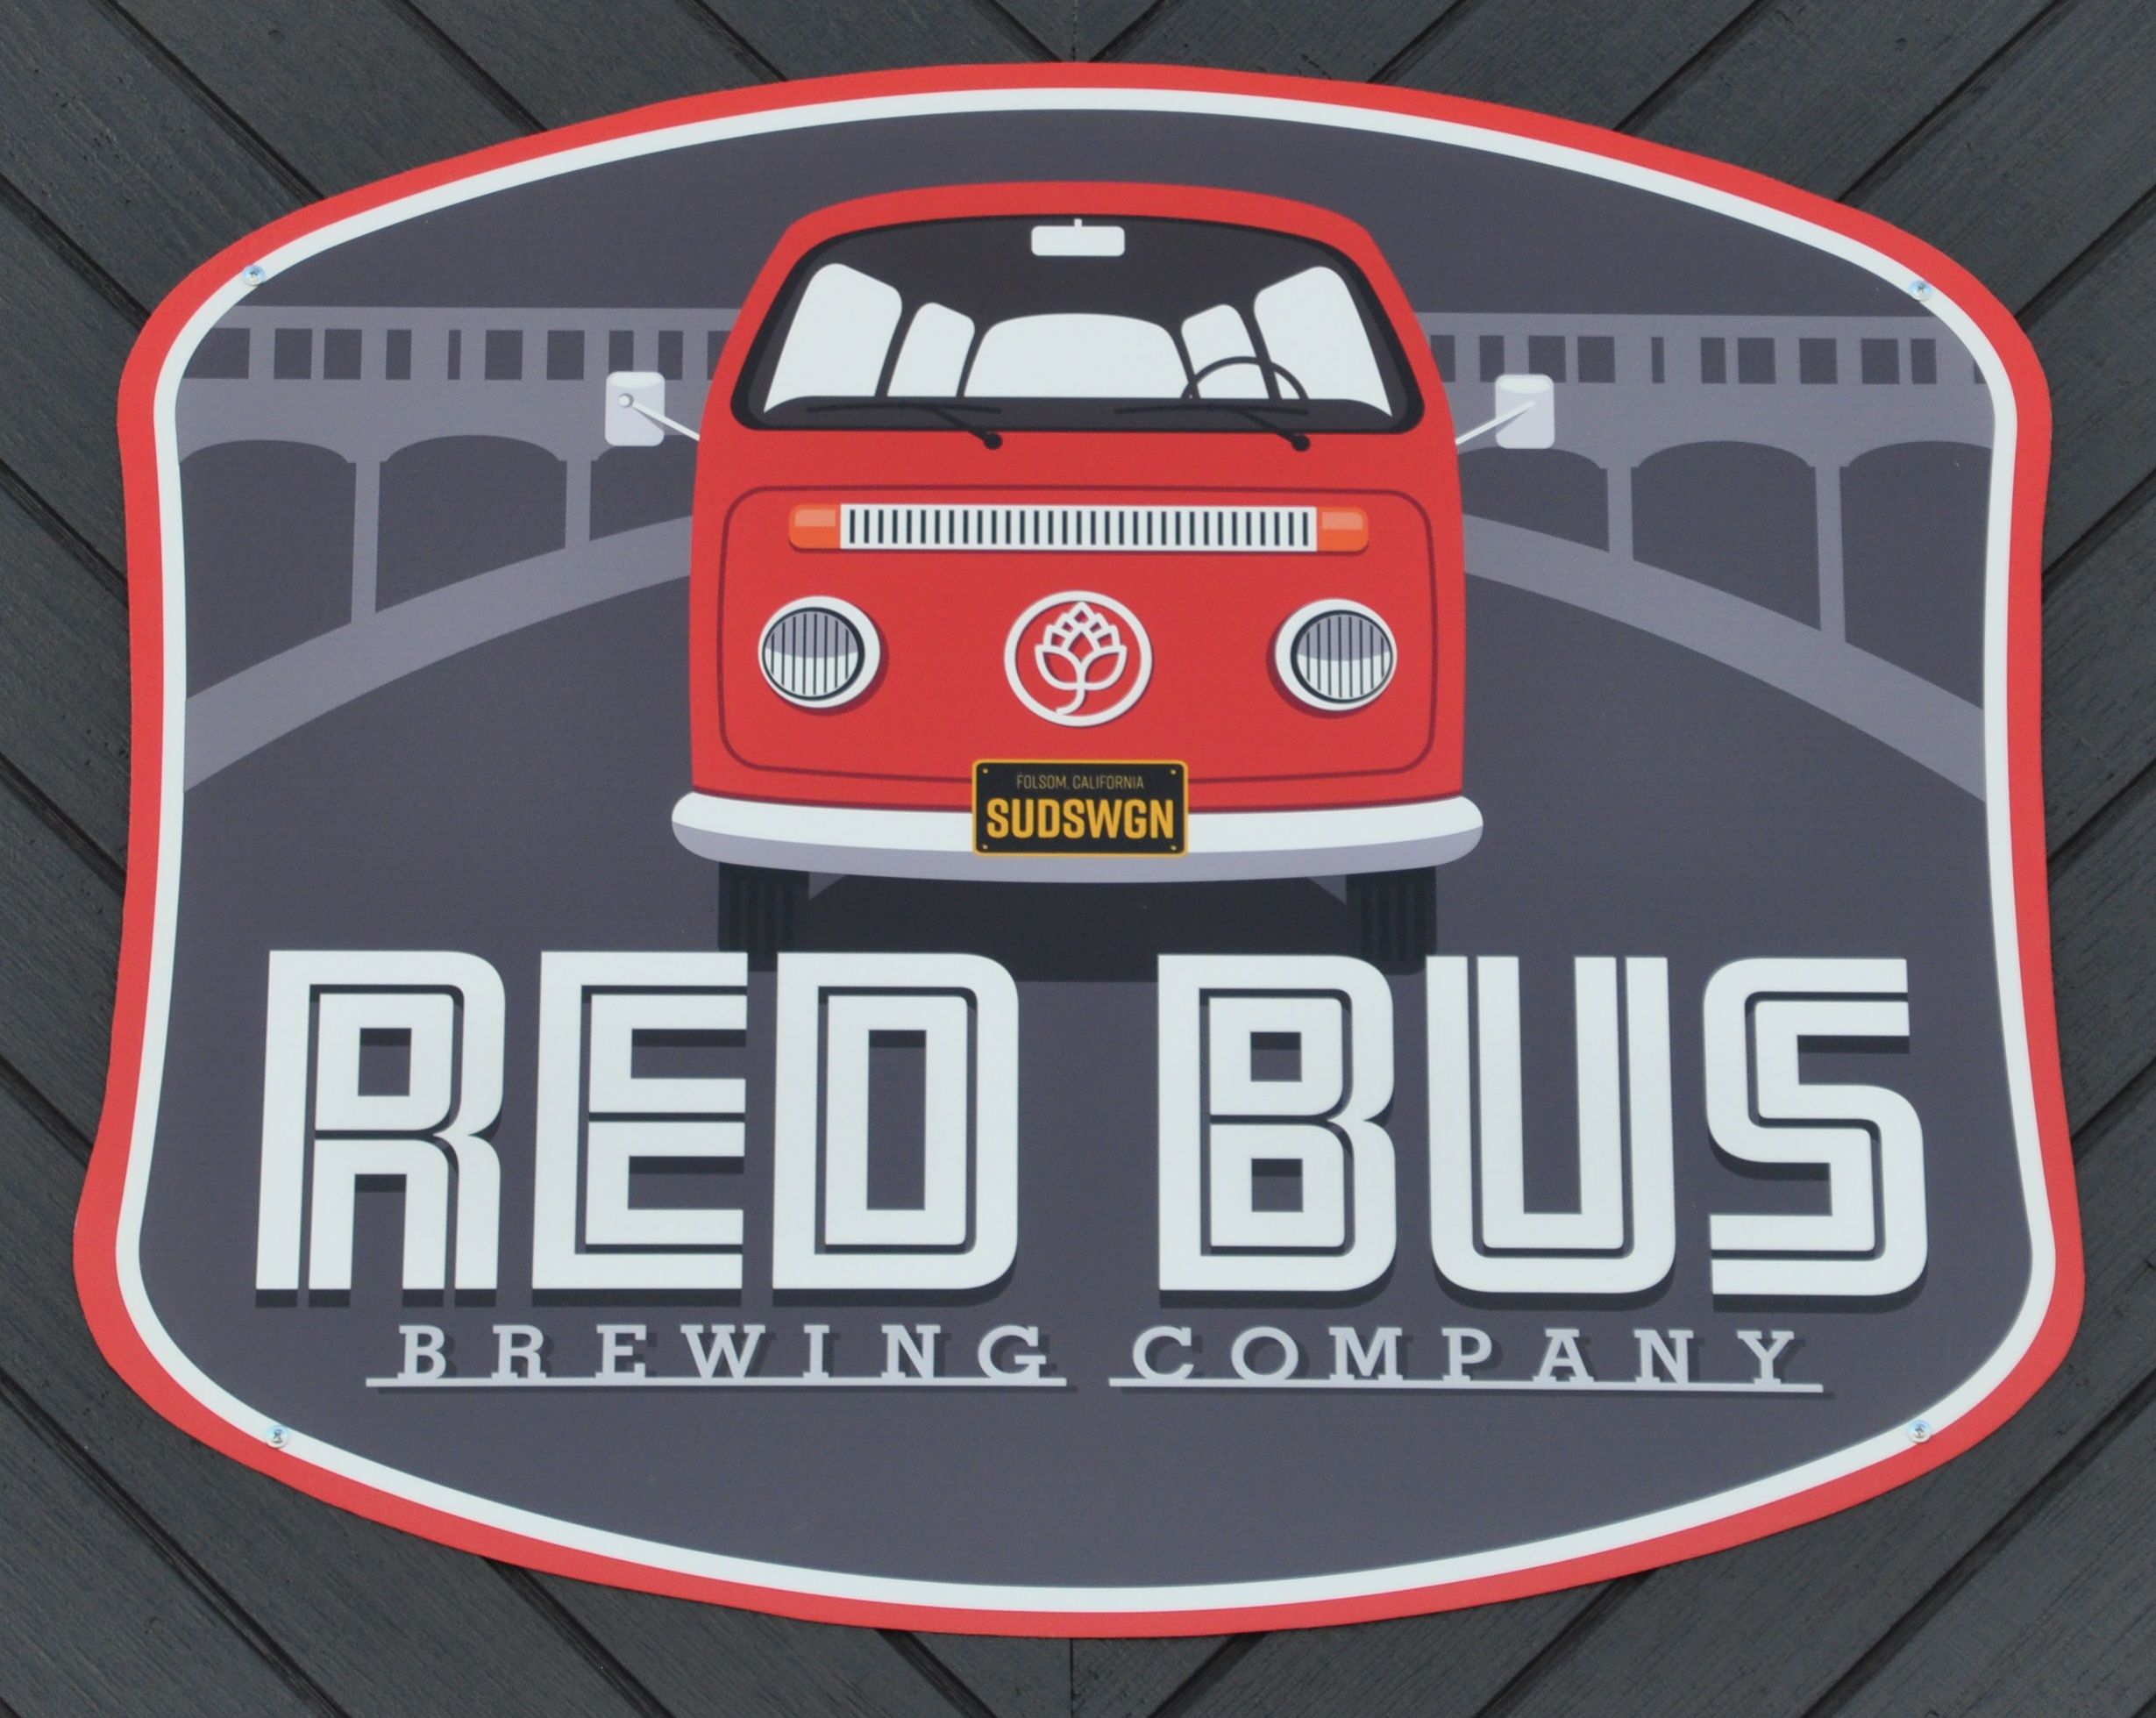 Red Bus Brewing logo